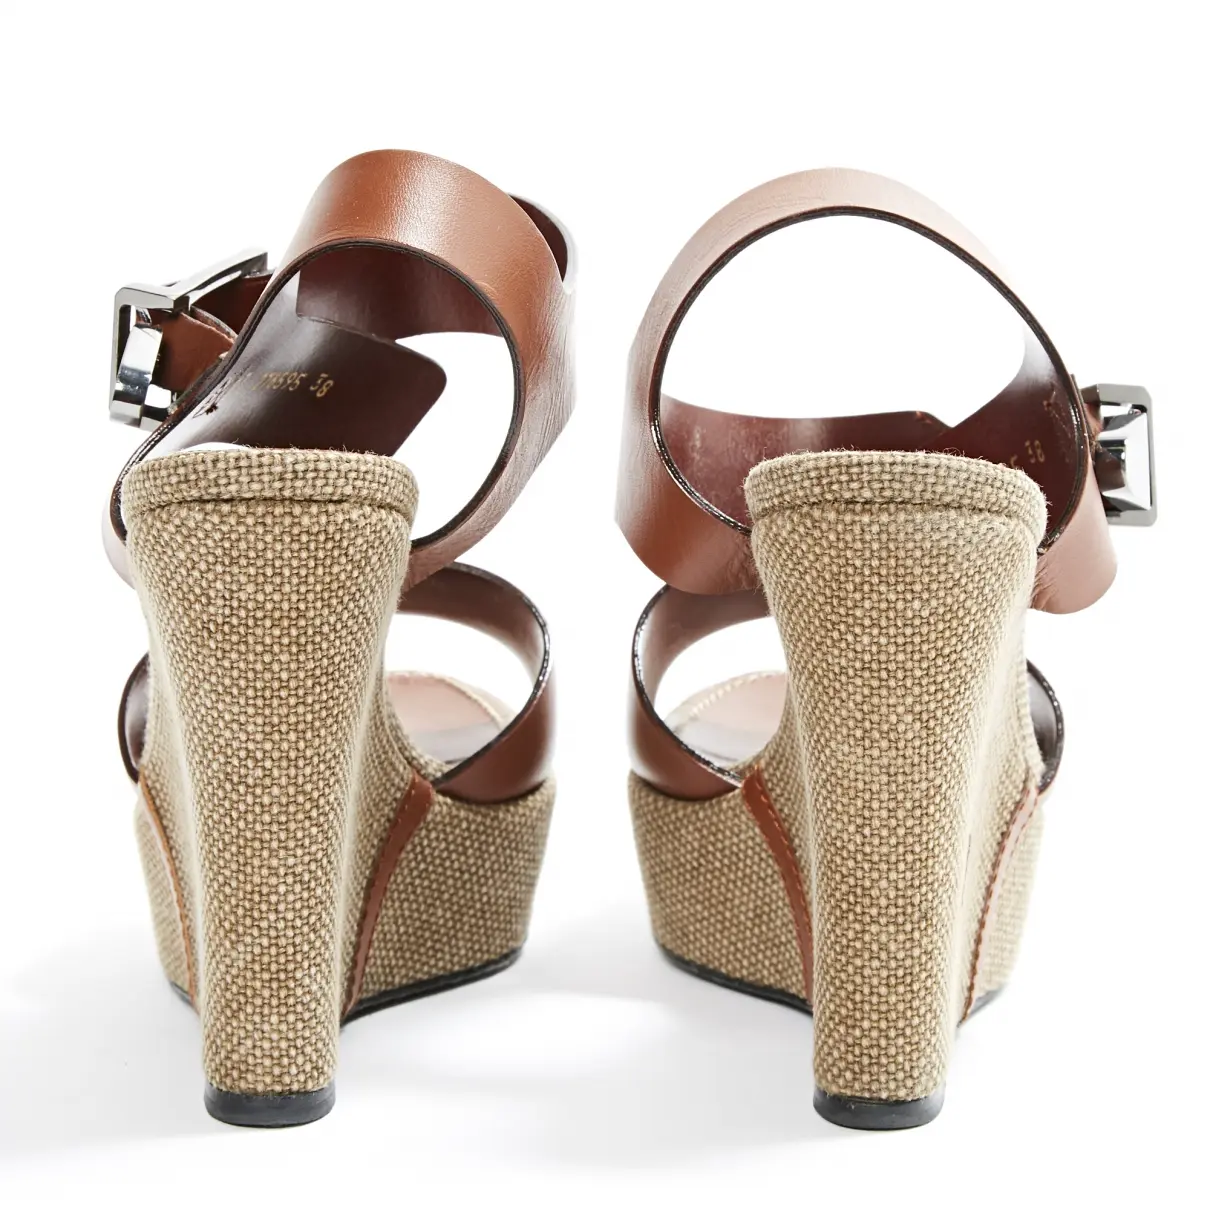 Luxury Barbara Bui Sandals Women